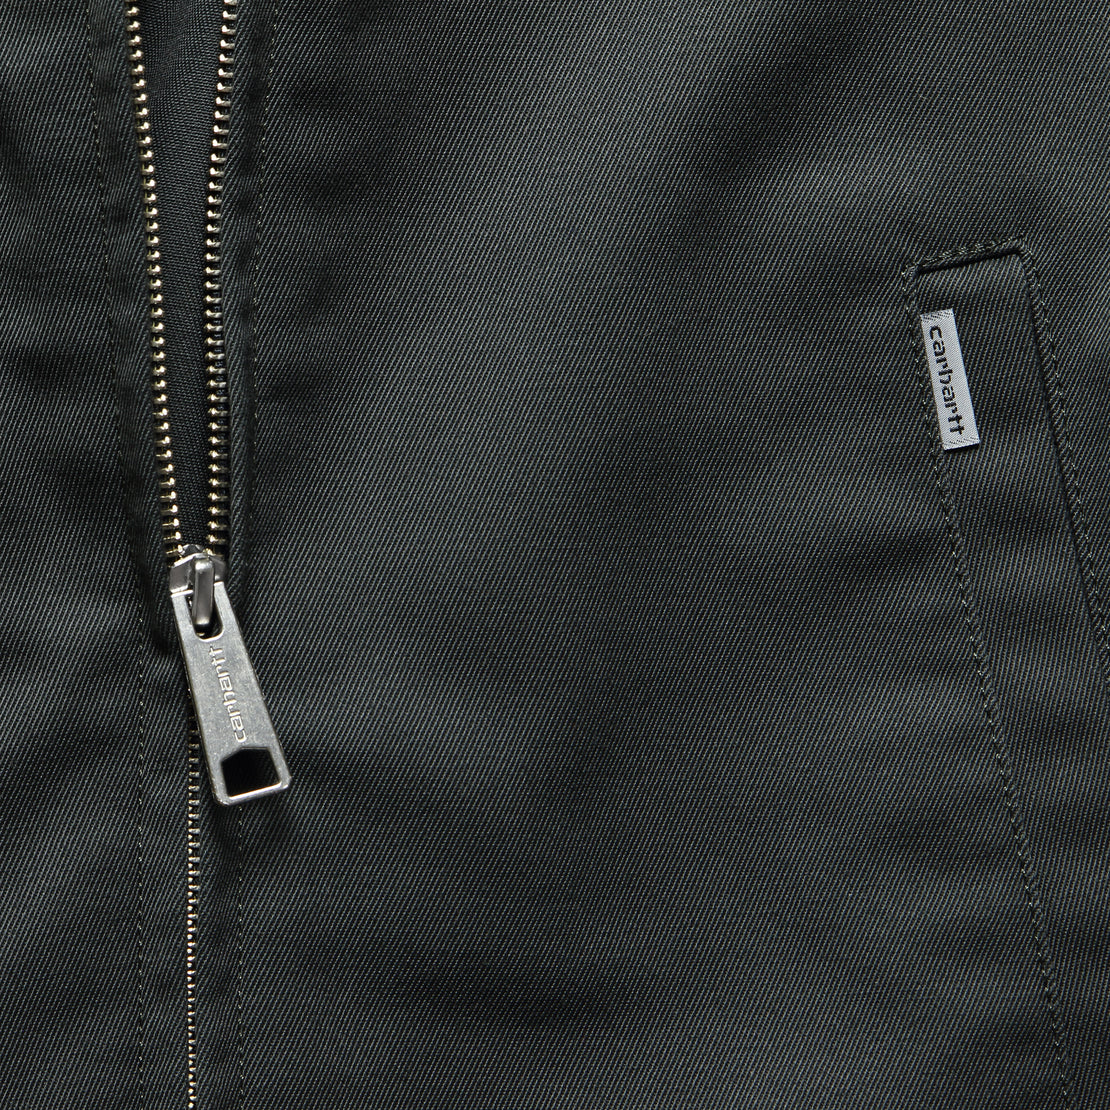 Modular Jacket - Asphalt